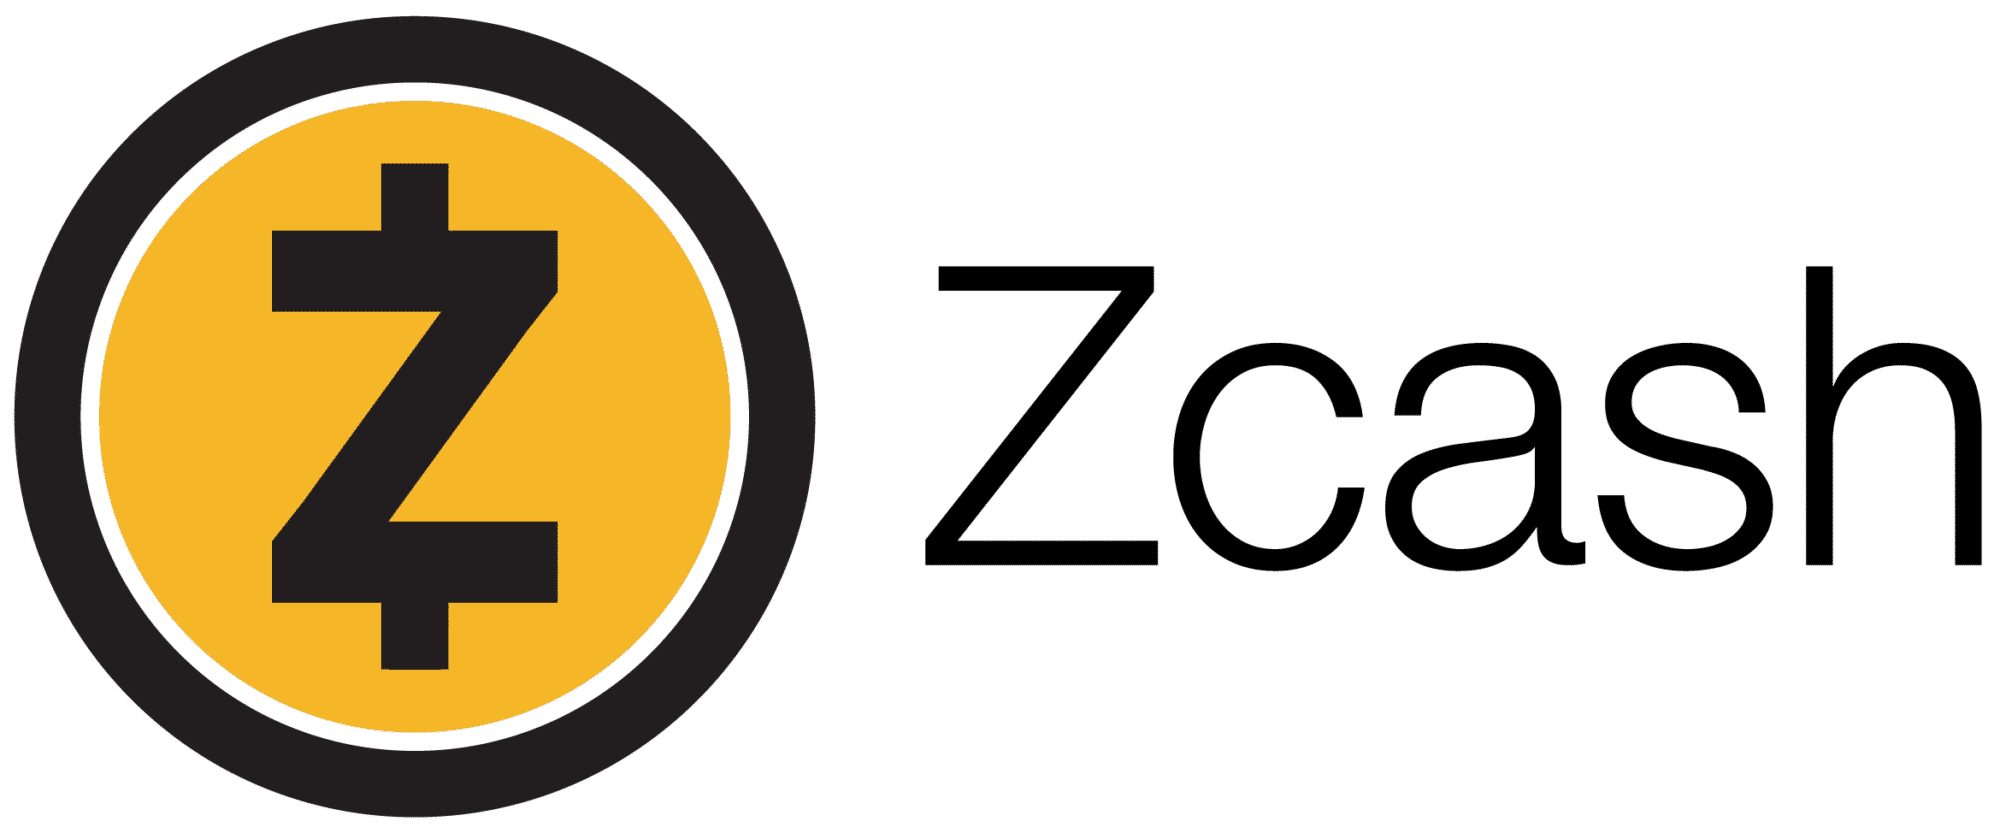 ETORO ADDS ZEC TO ITS EXPANDING